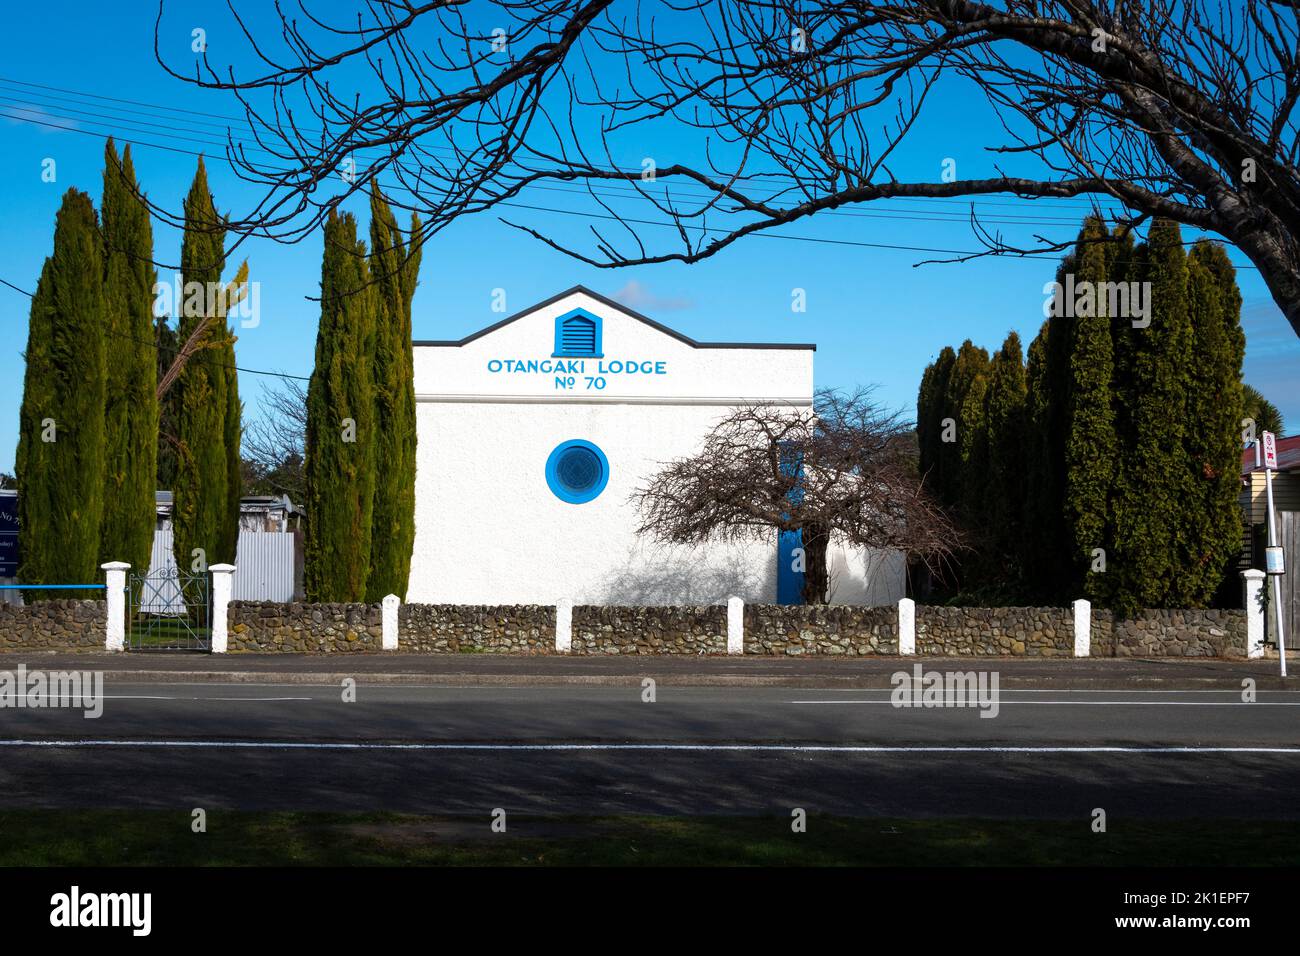 Otangaki Masonic Lodge building, Ashurst, Manawatu, North Island, New Zealand Stock Photo